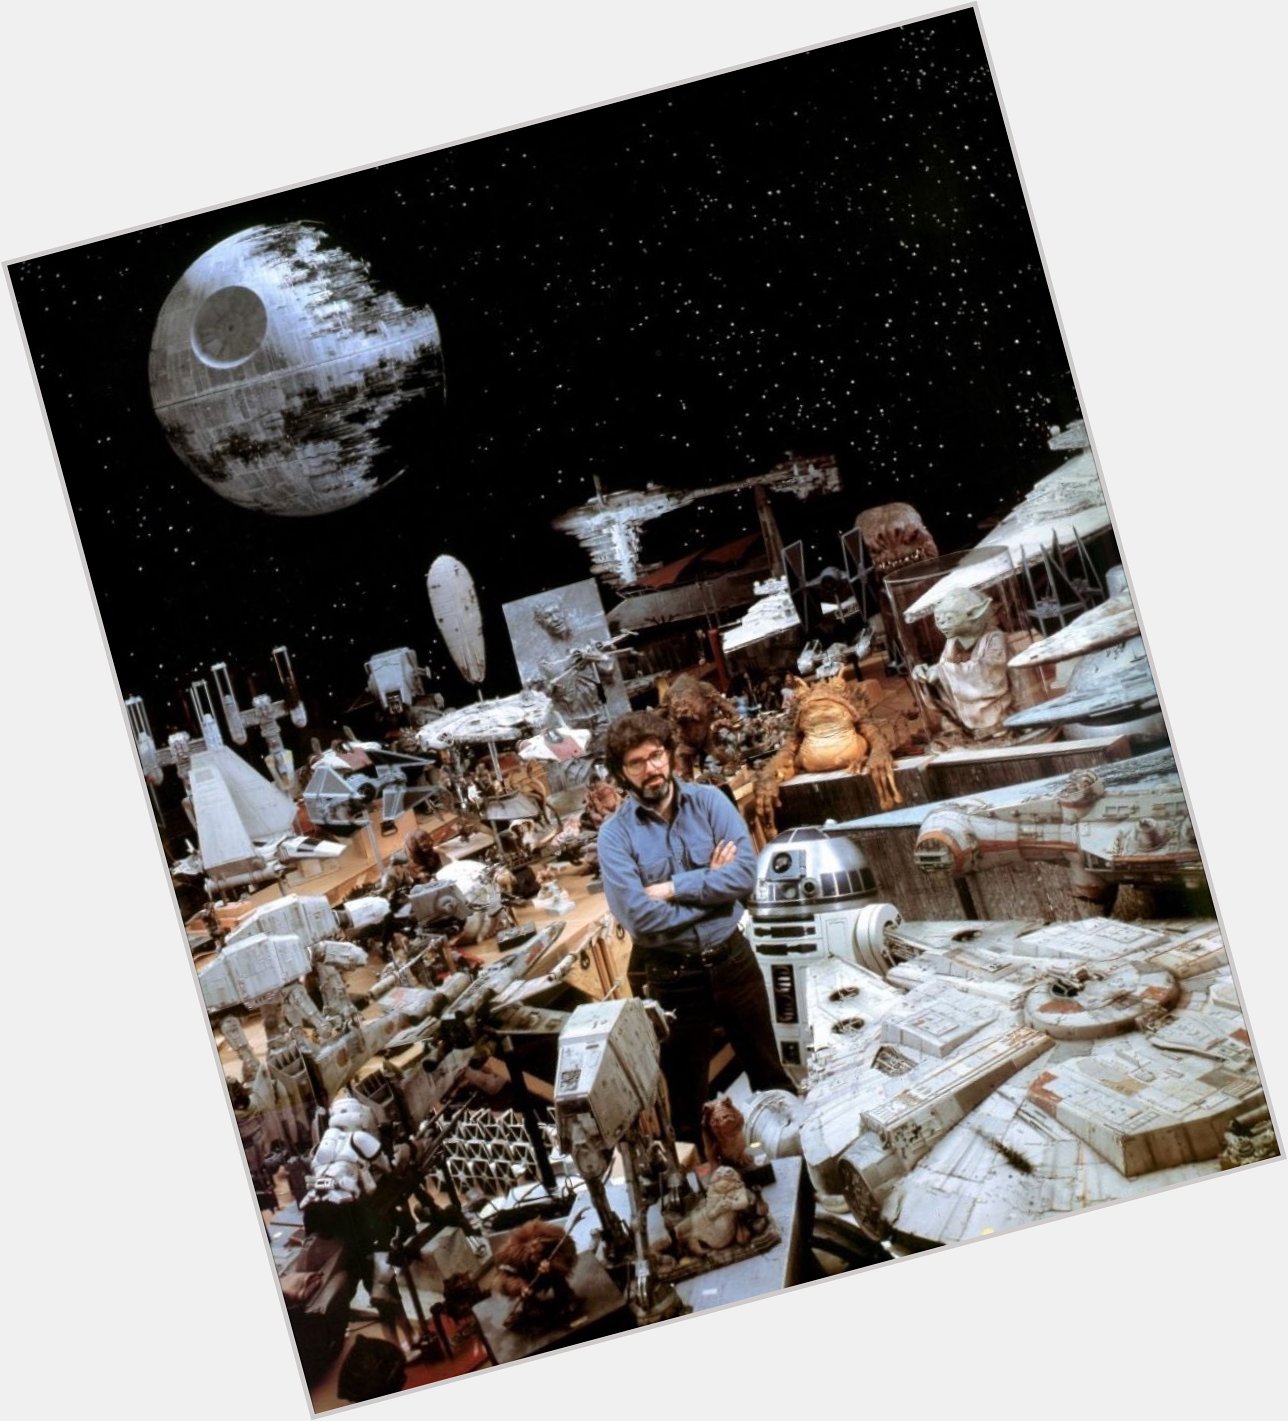 Happy 74th birthday, George Lucas! 